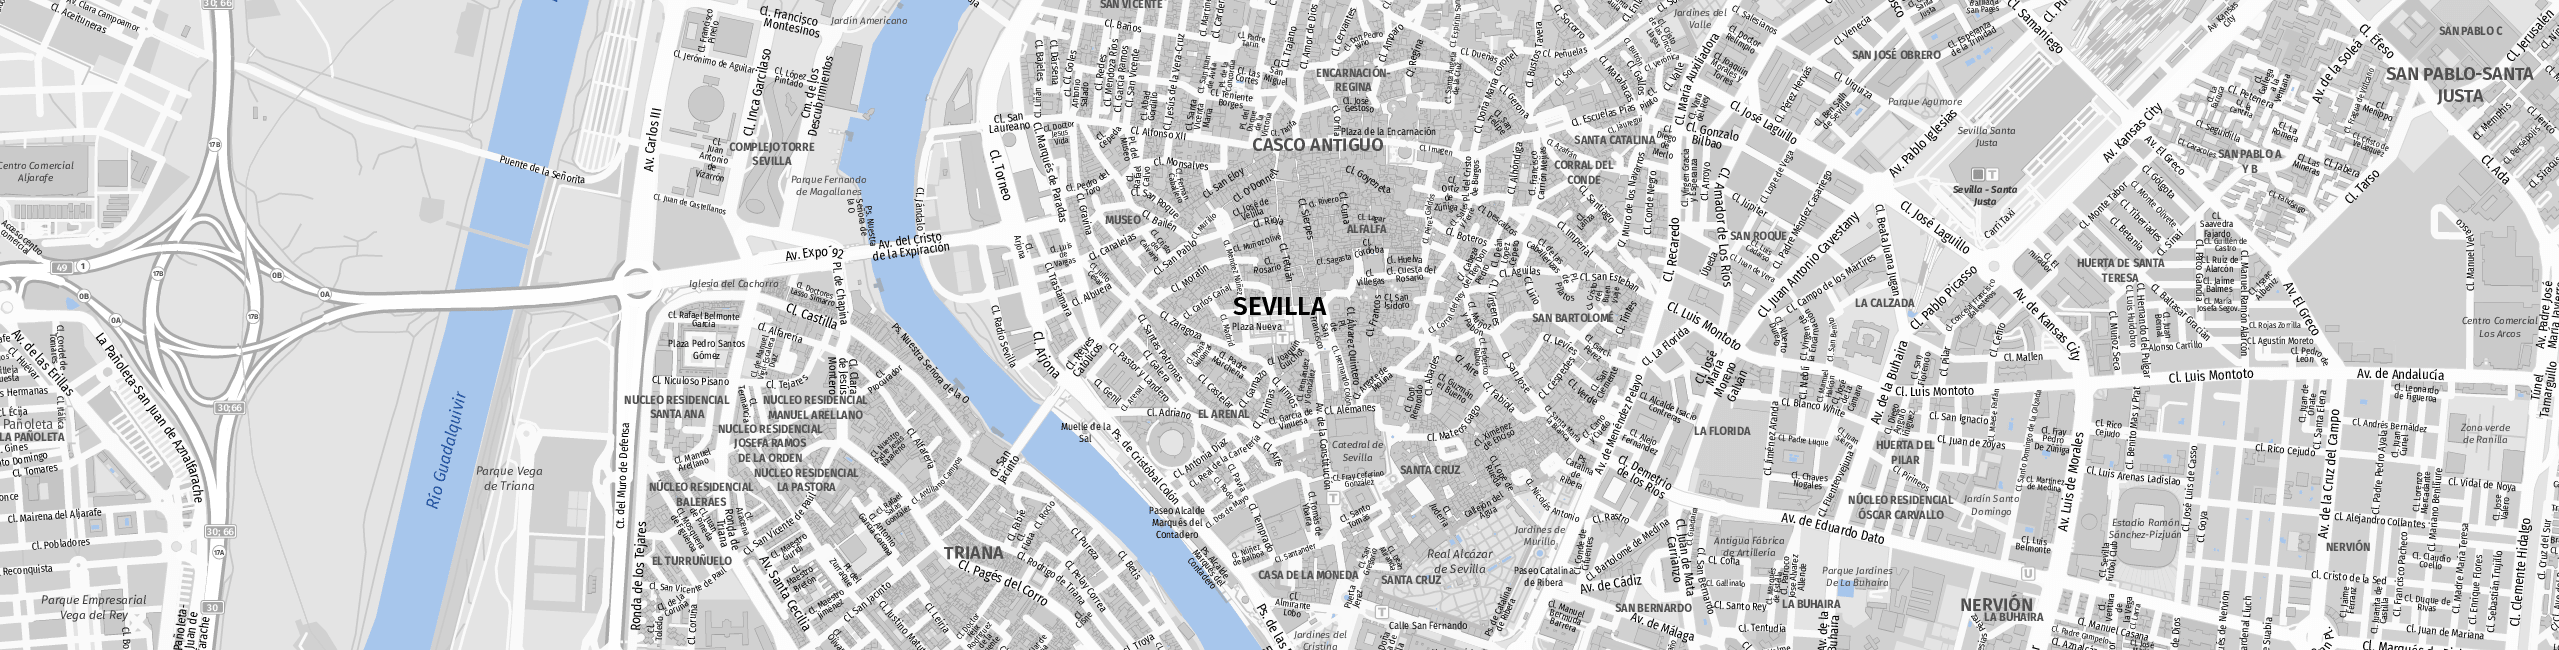 Stadtplan Sevilla zum Downloaden.